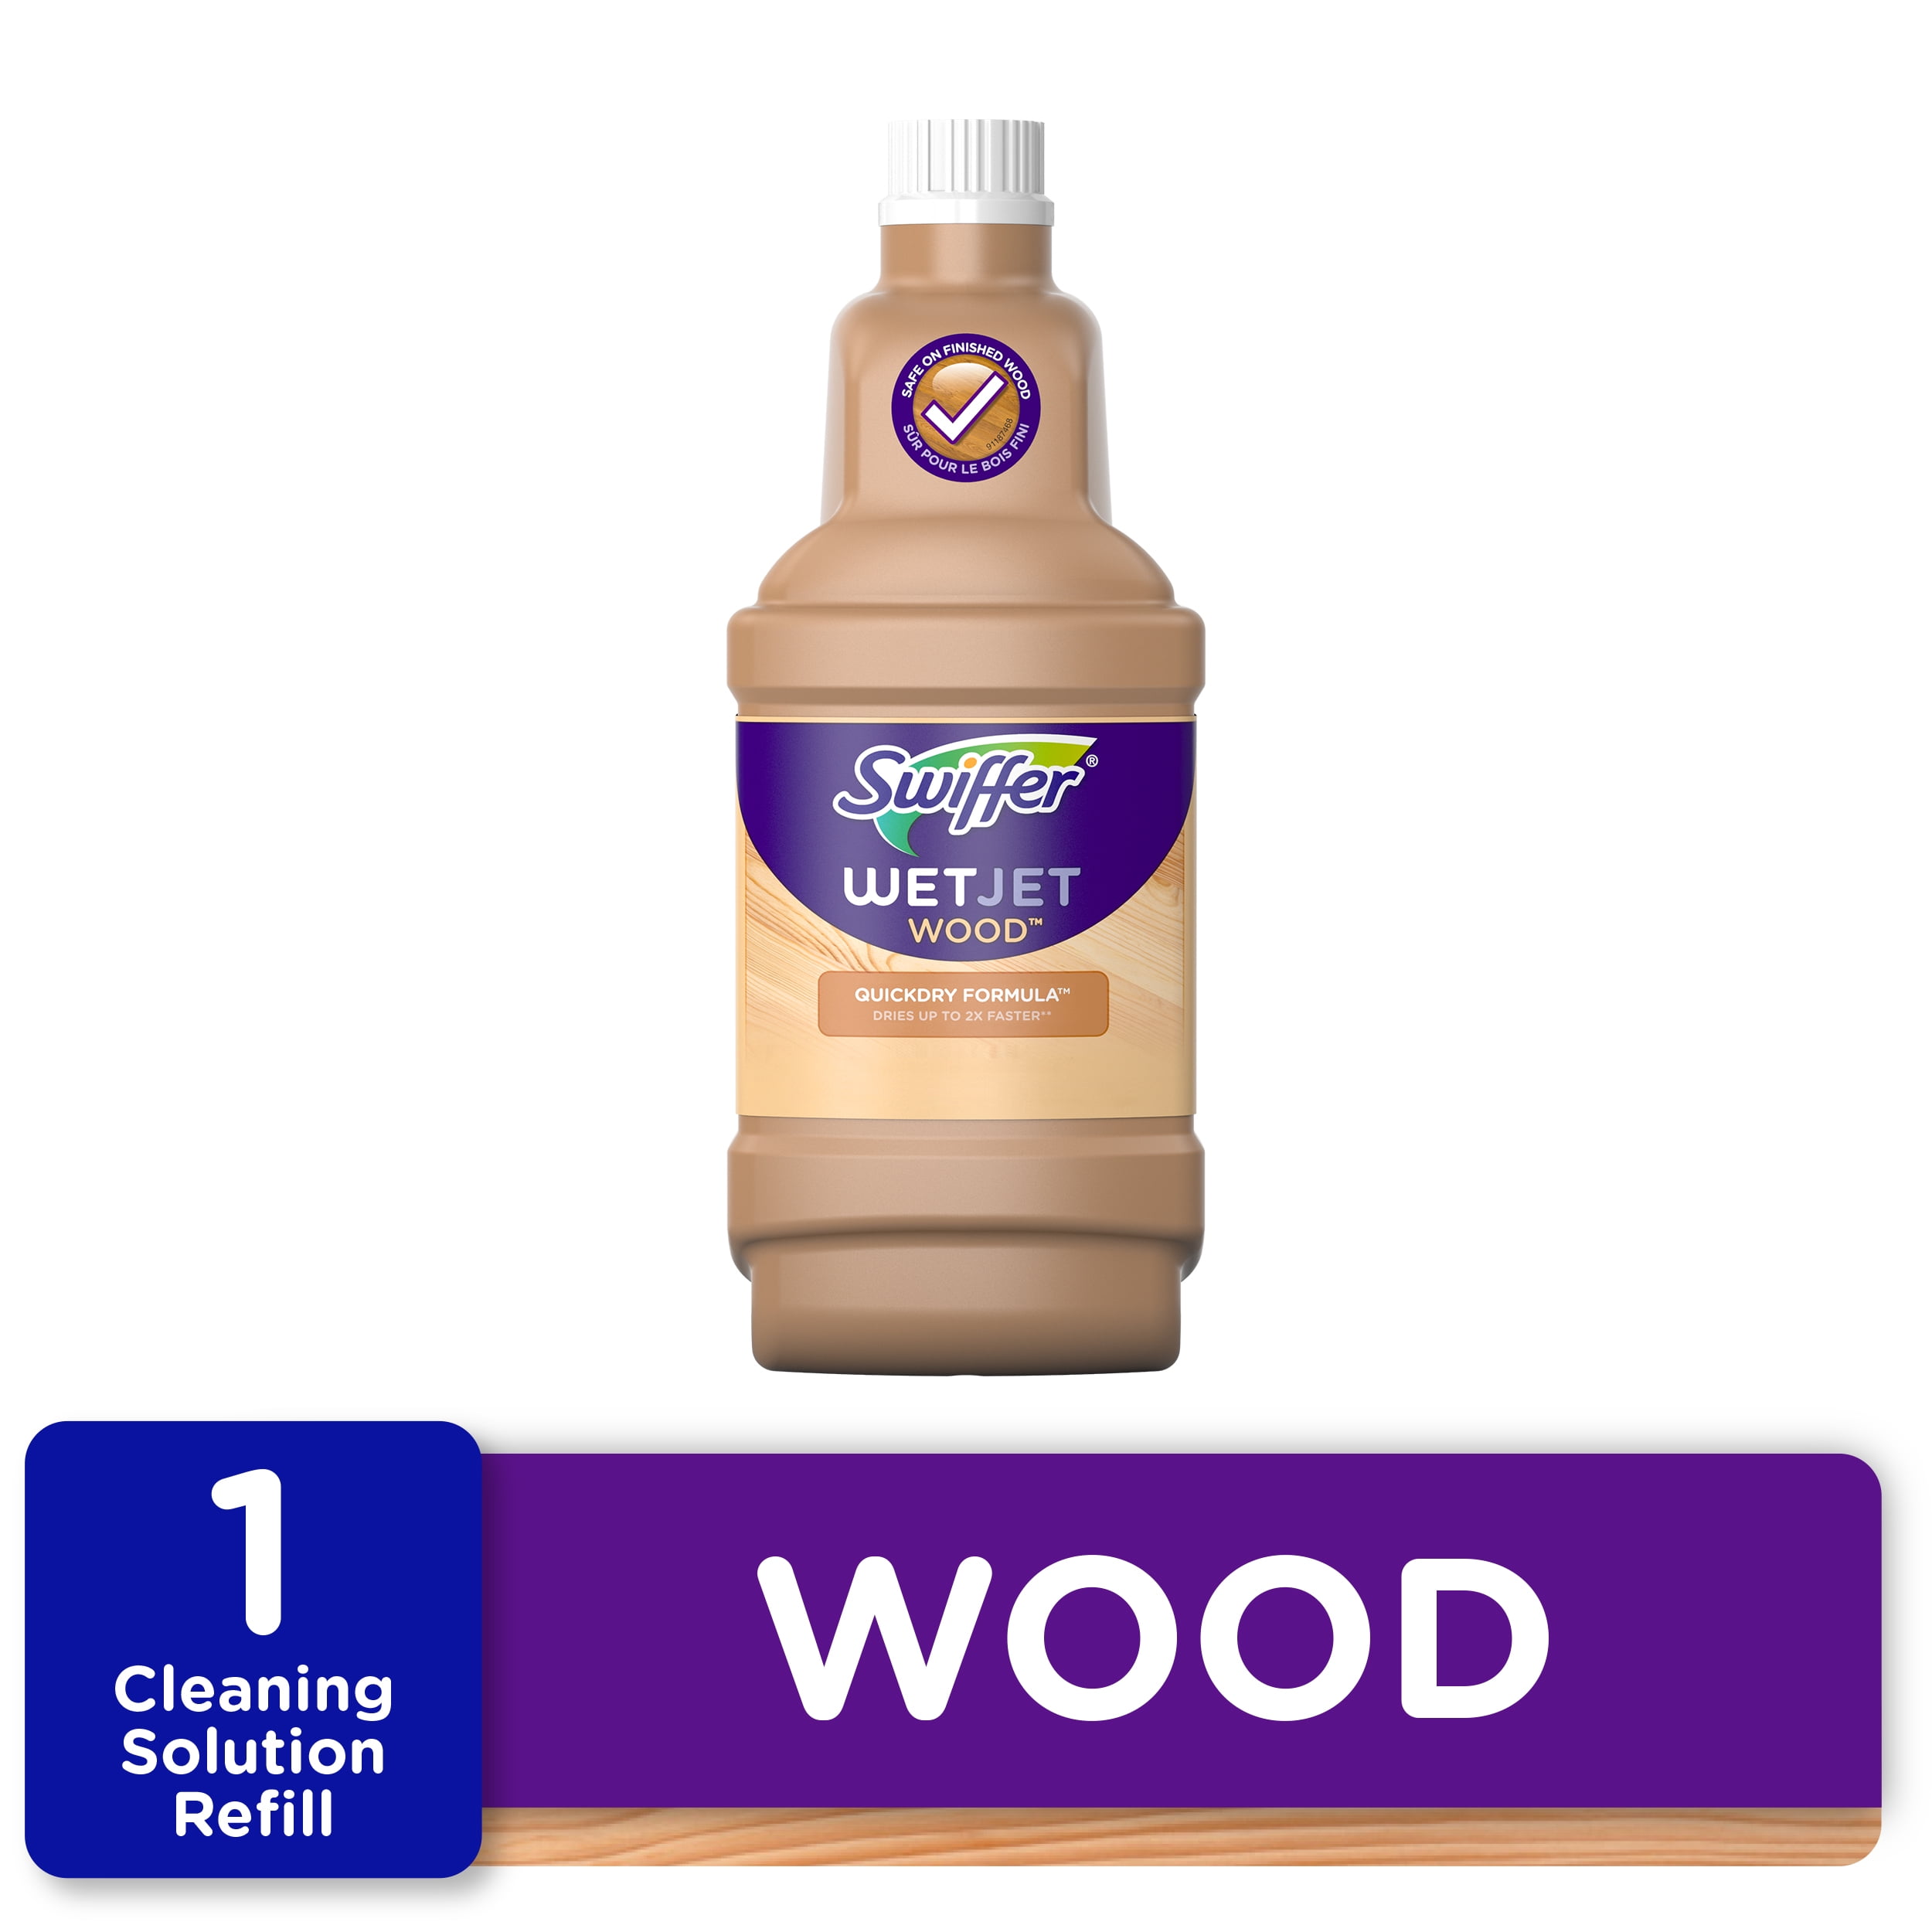 Swiffer Wetjet Quickdry Formula Wood, Hardwood Floor Cleaning Solution